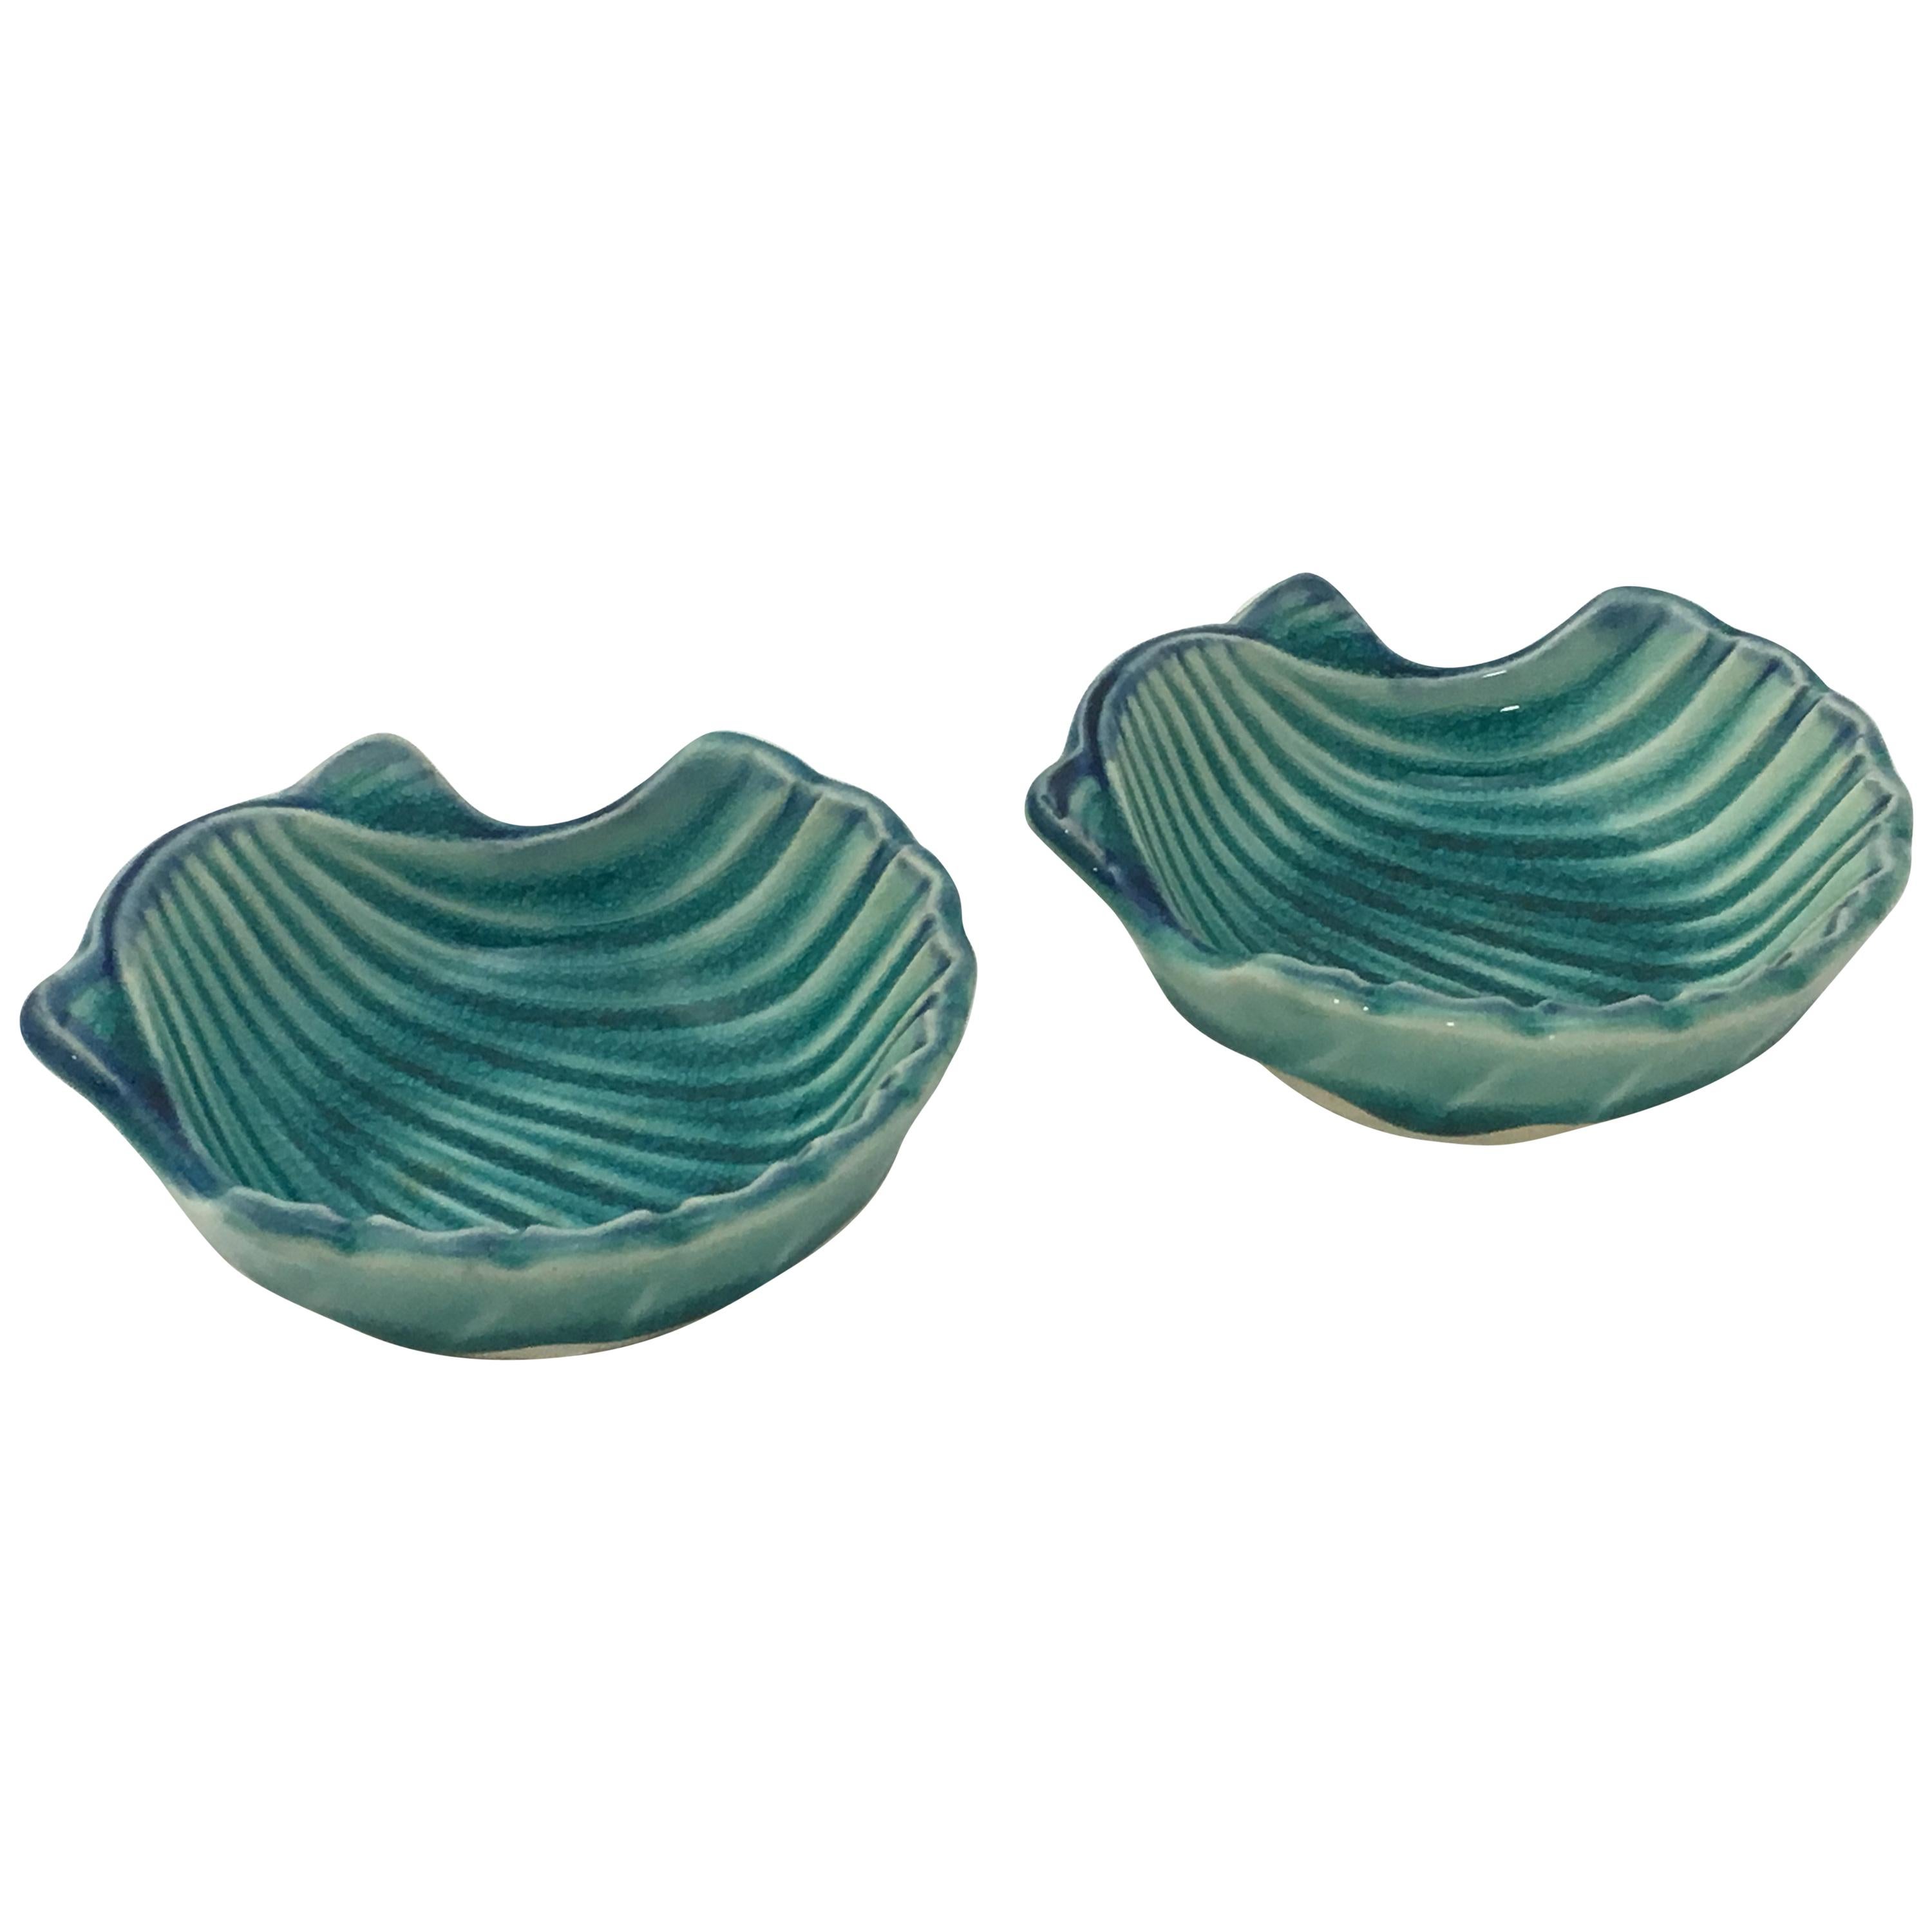 1960s Azure Blue Japanese Scallop Shell Bowls